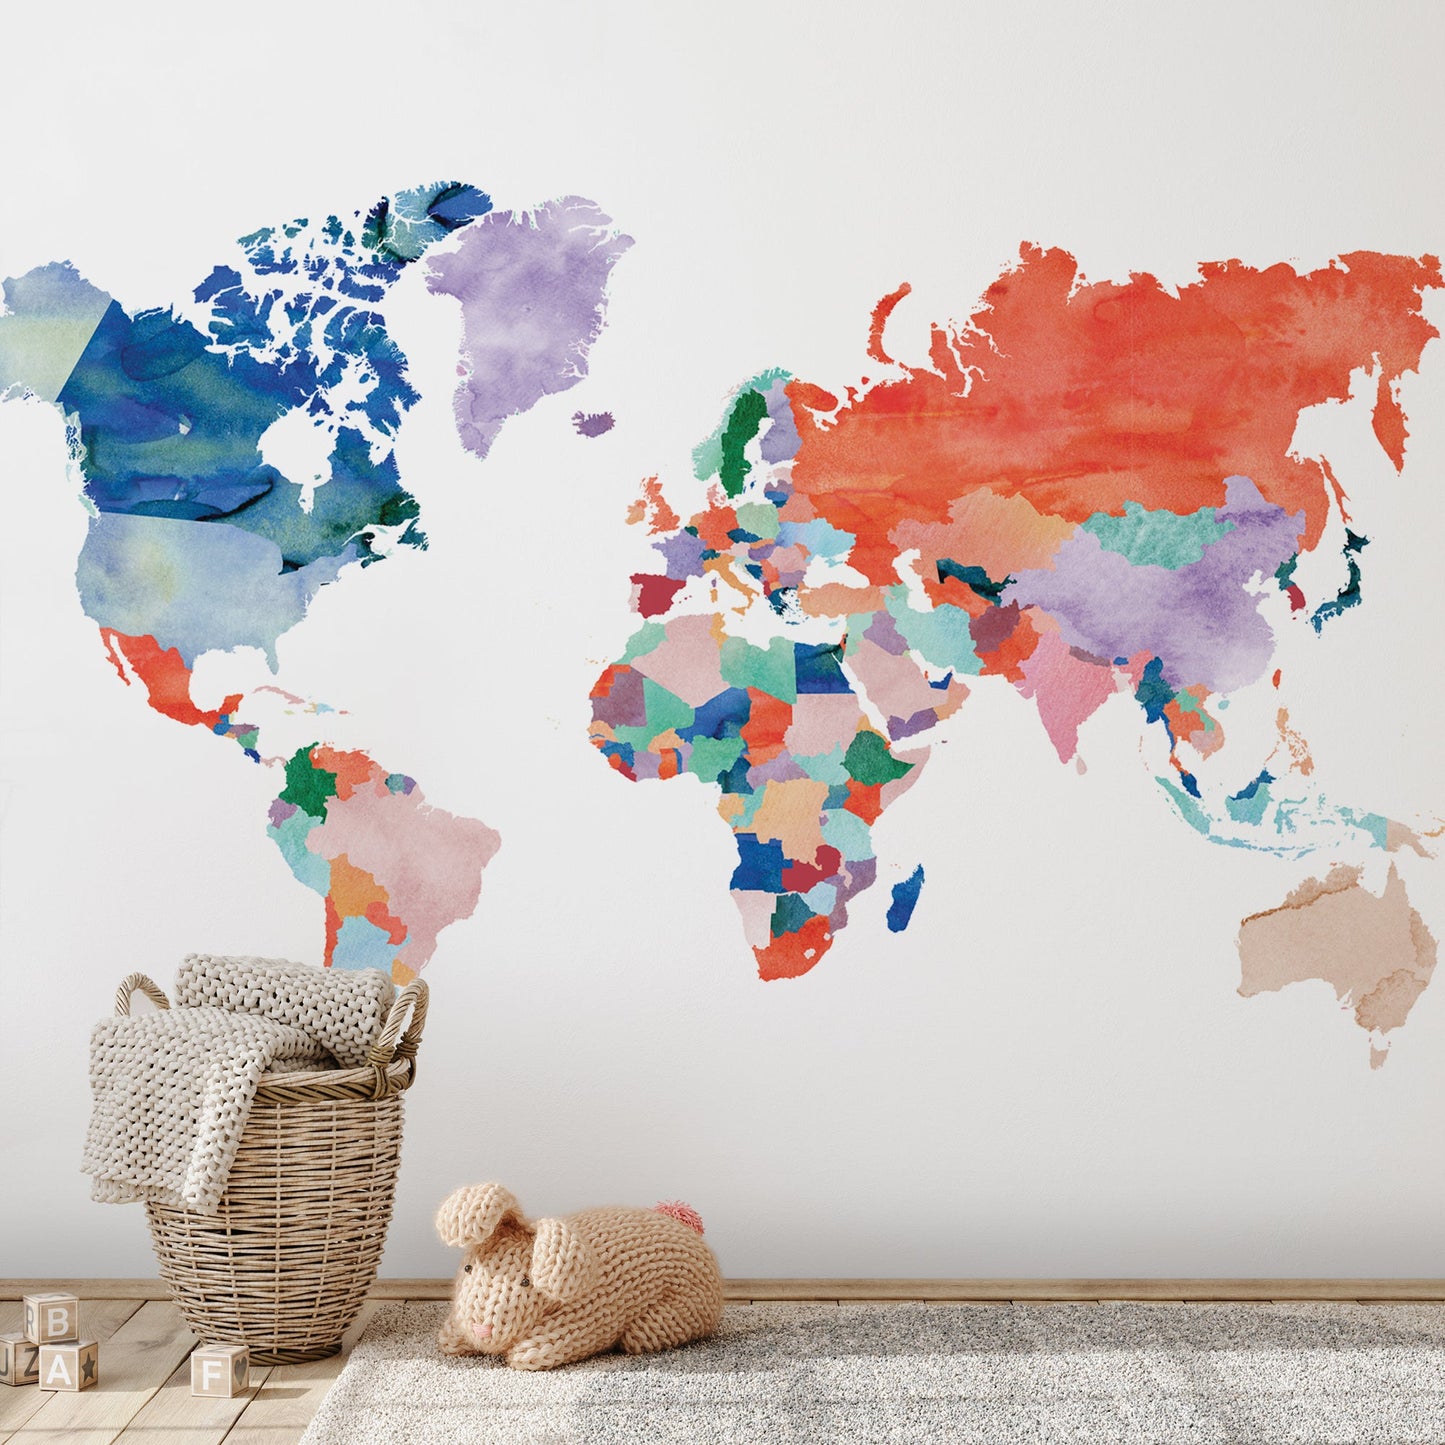 Peel & Stick Wall Mural - Watercolor World Map By Elena David